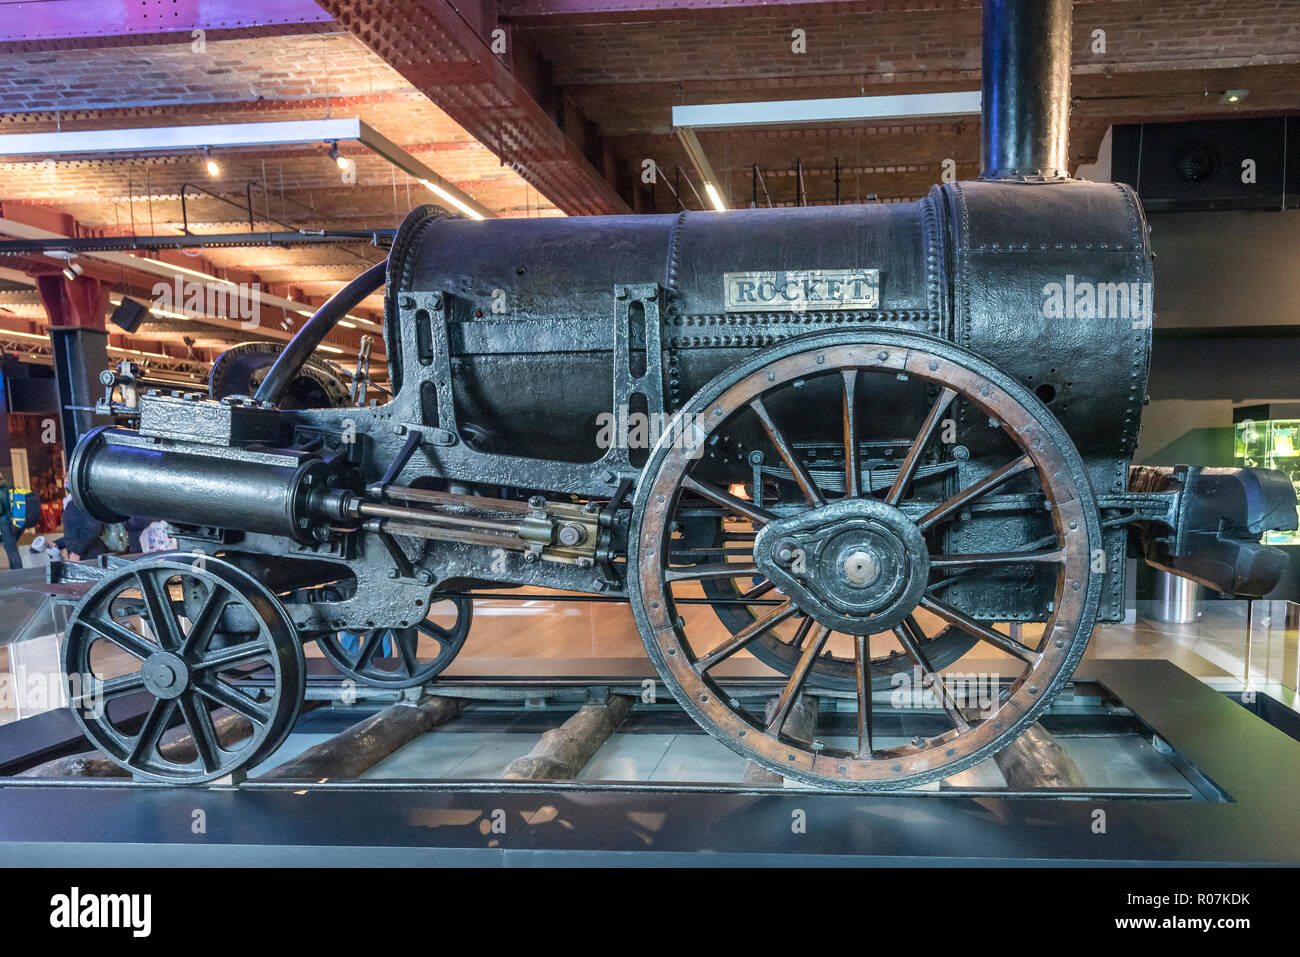 Stephenson's Rocket machine à vapeur au Manchester Museum of Science and Industry. Banque D'Images